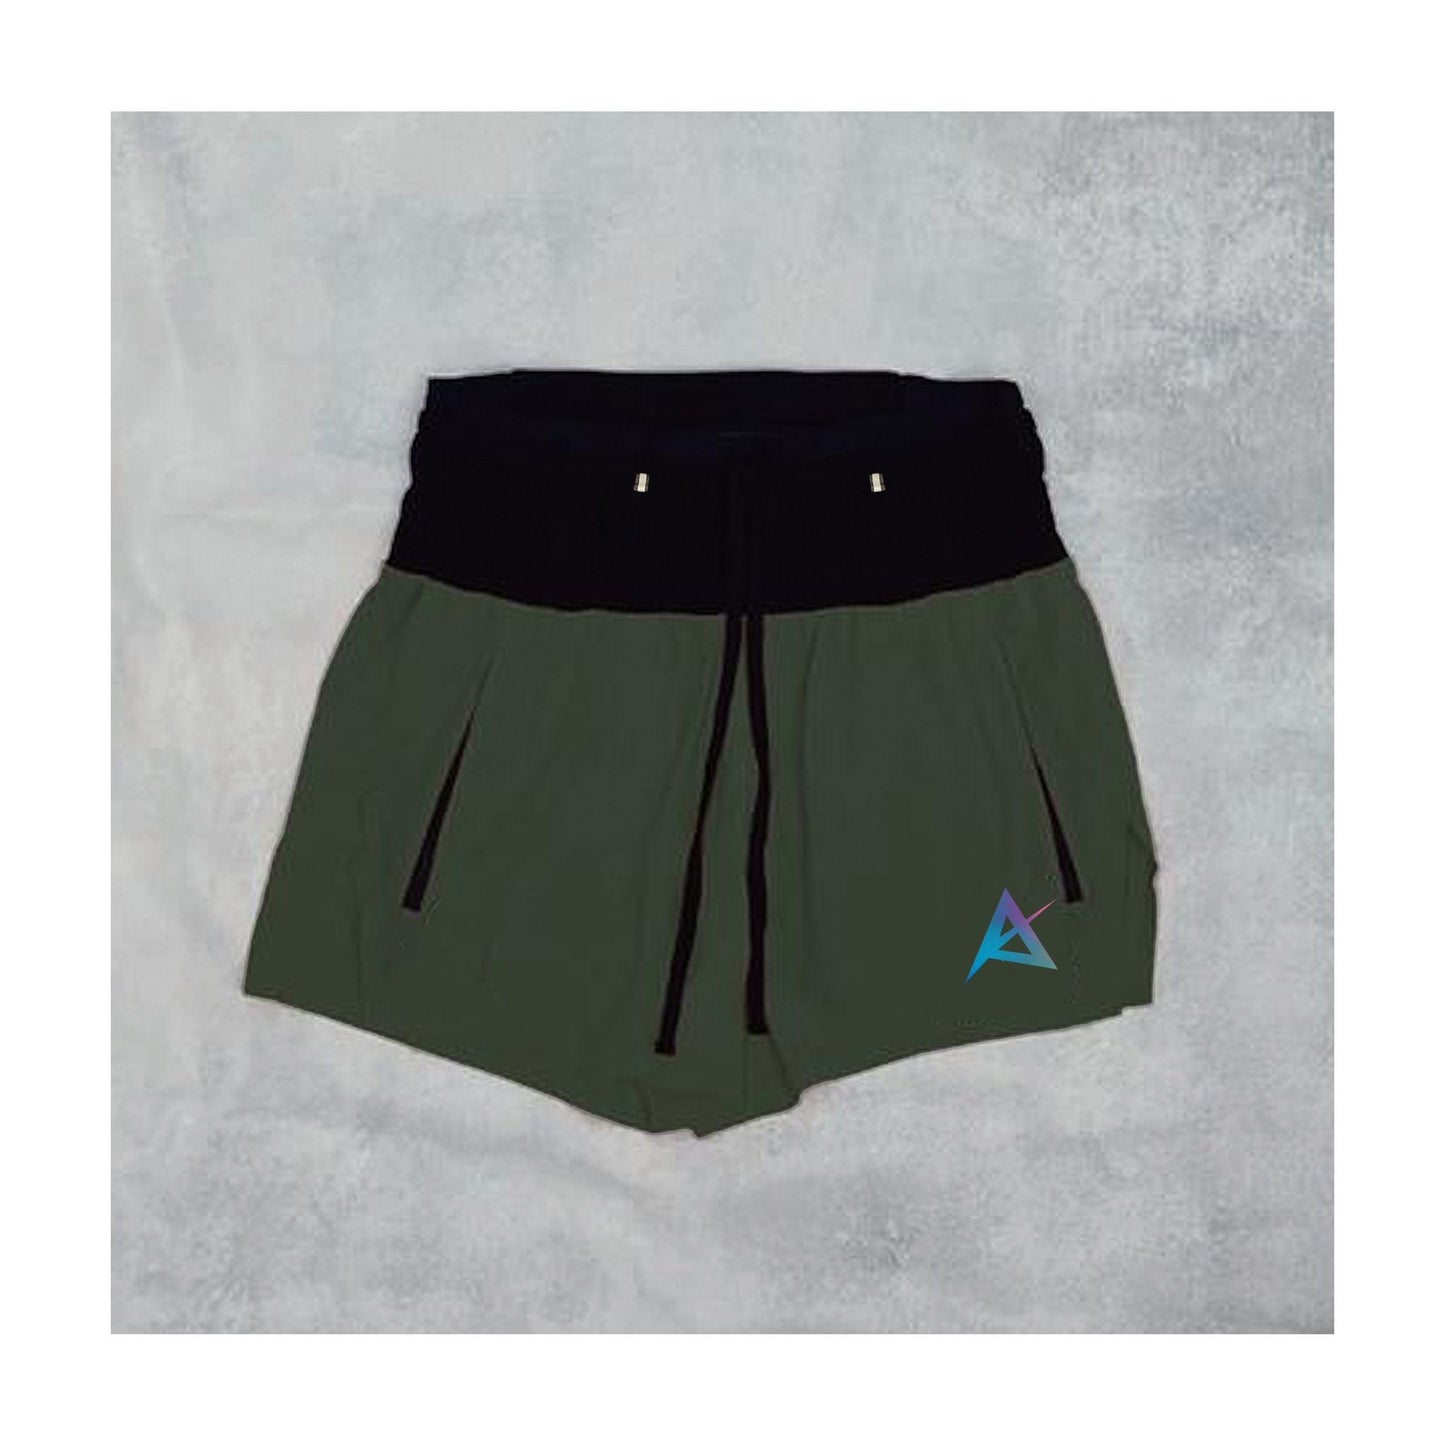 【Limited-Triangular inner】 AKIV TRAIL RUNNING Shorts (Unisex) - Earth Green